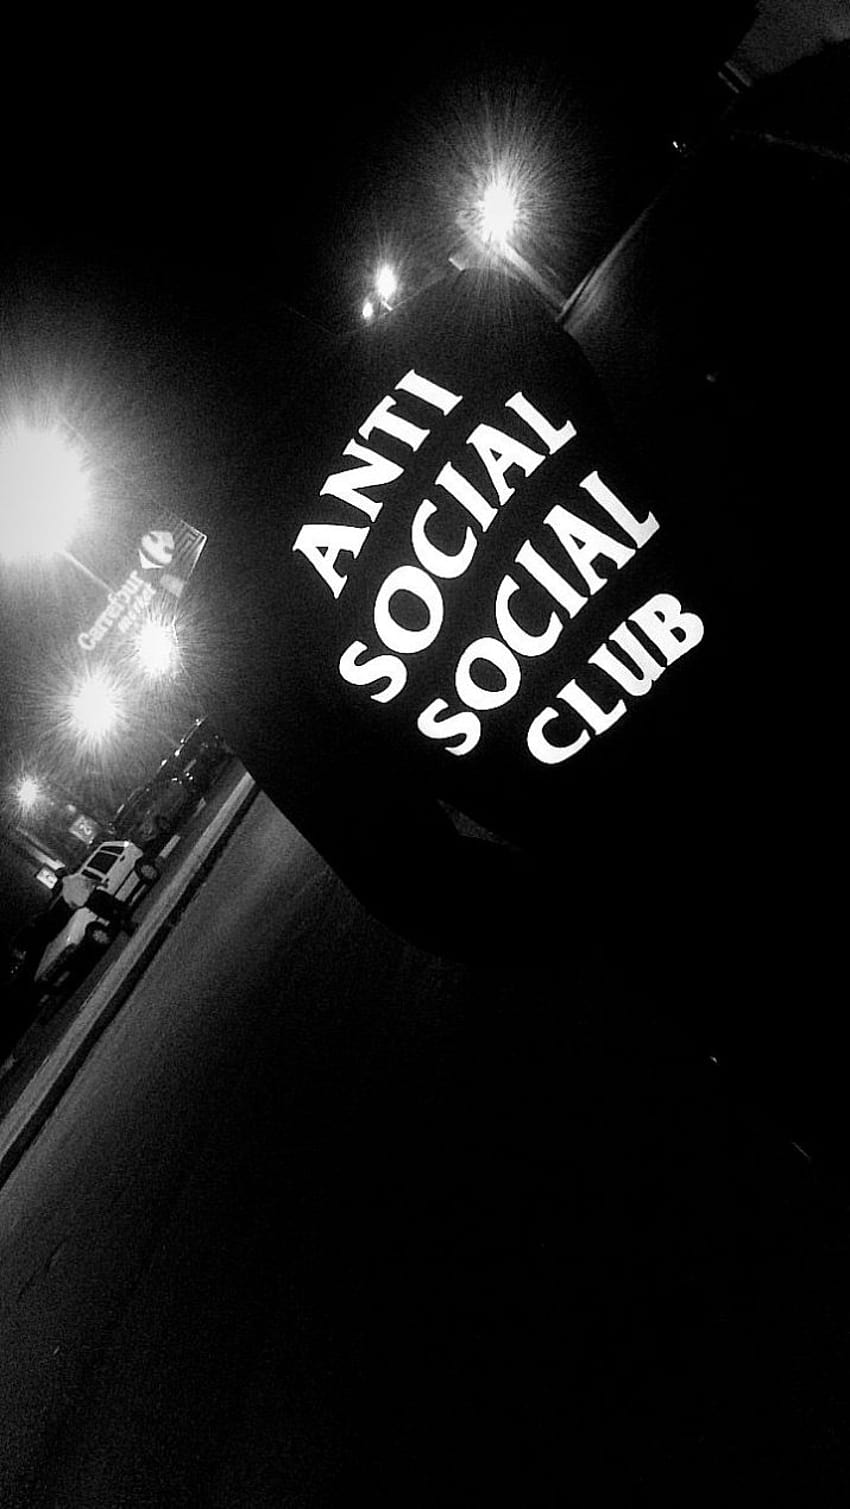 A black Anti Social Social Club shirt on a mannequin in a dark room with bright lights - Anti Social Social Club